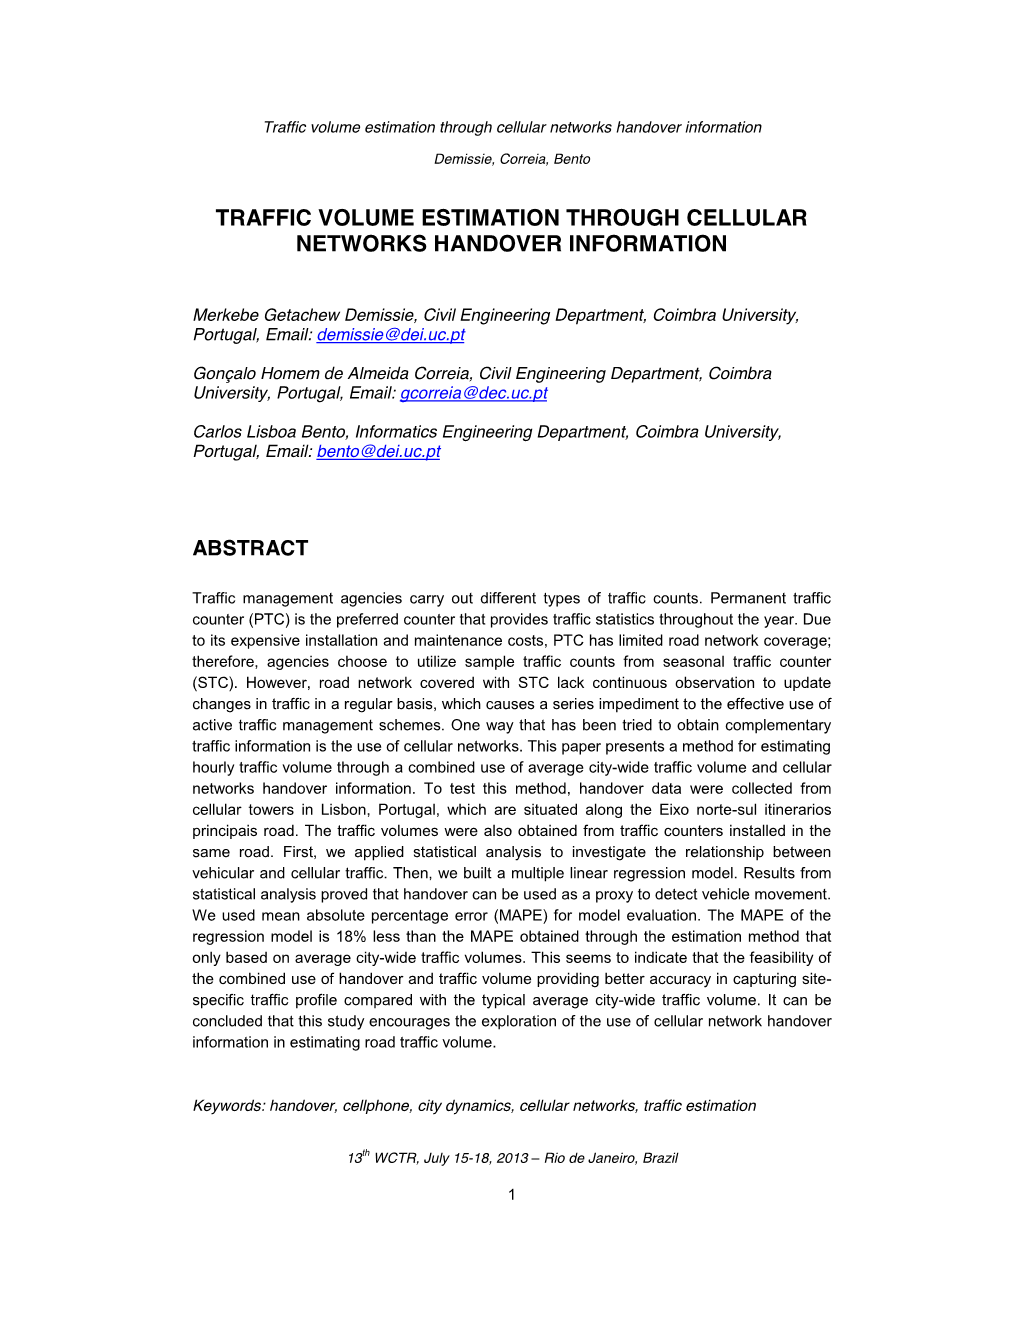 Traffic Volume Estimation Through Cellular Networks Handover Information